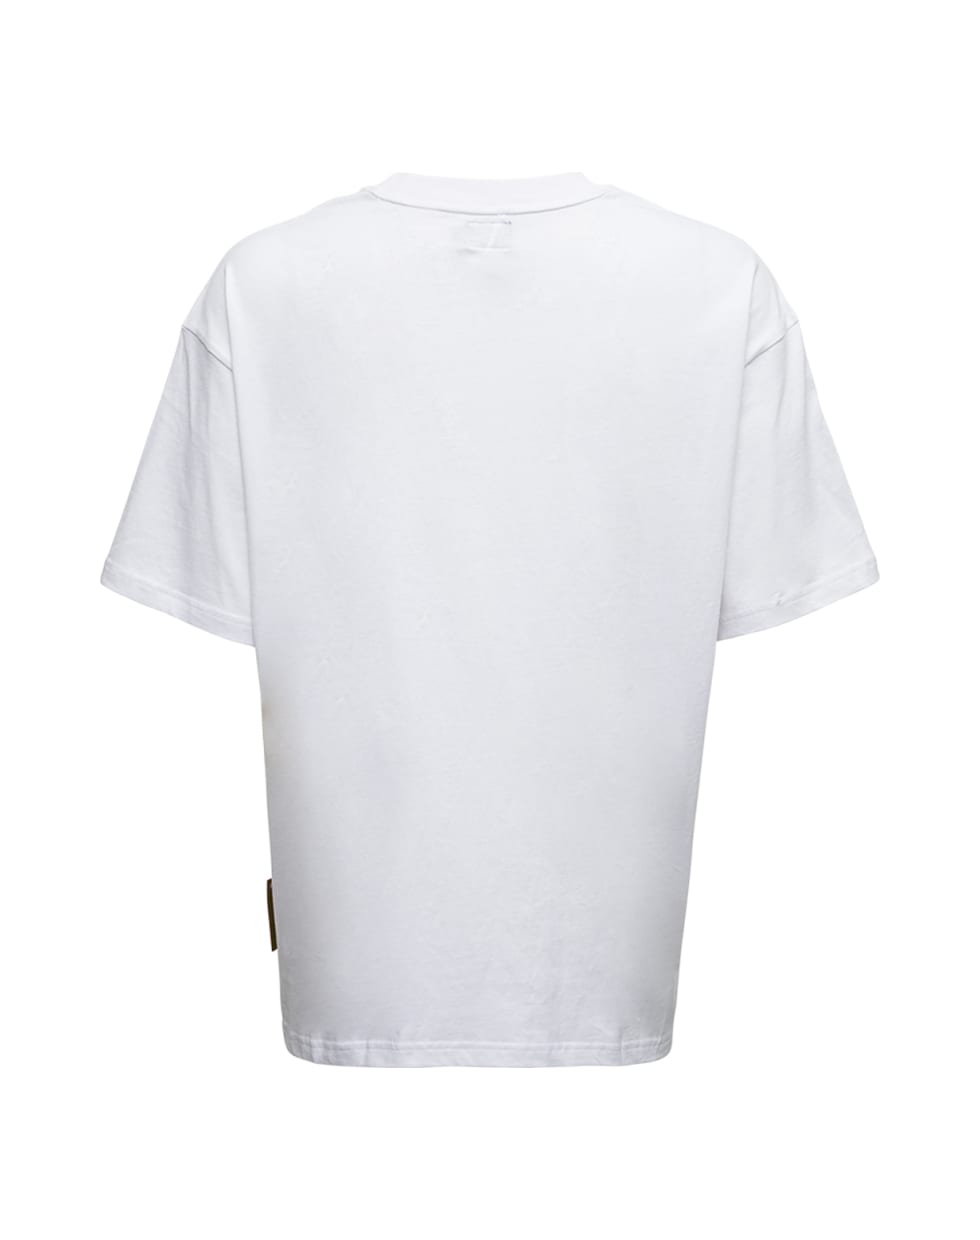 Evisu X Sfera Ebbasta Cotton T-shirt - White